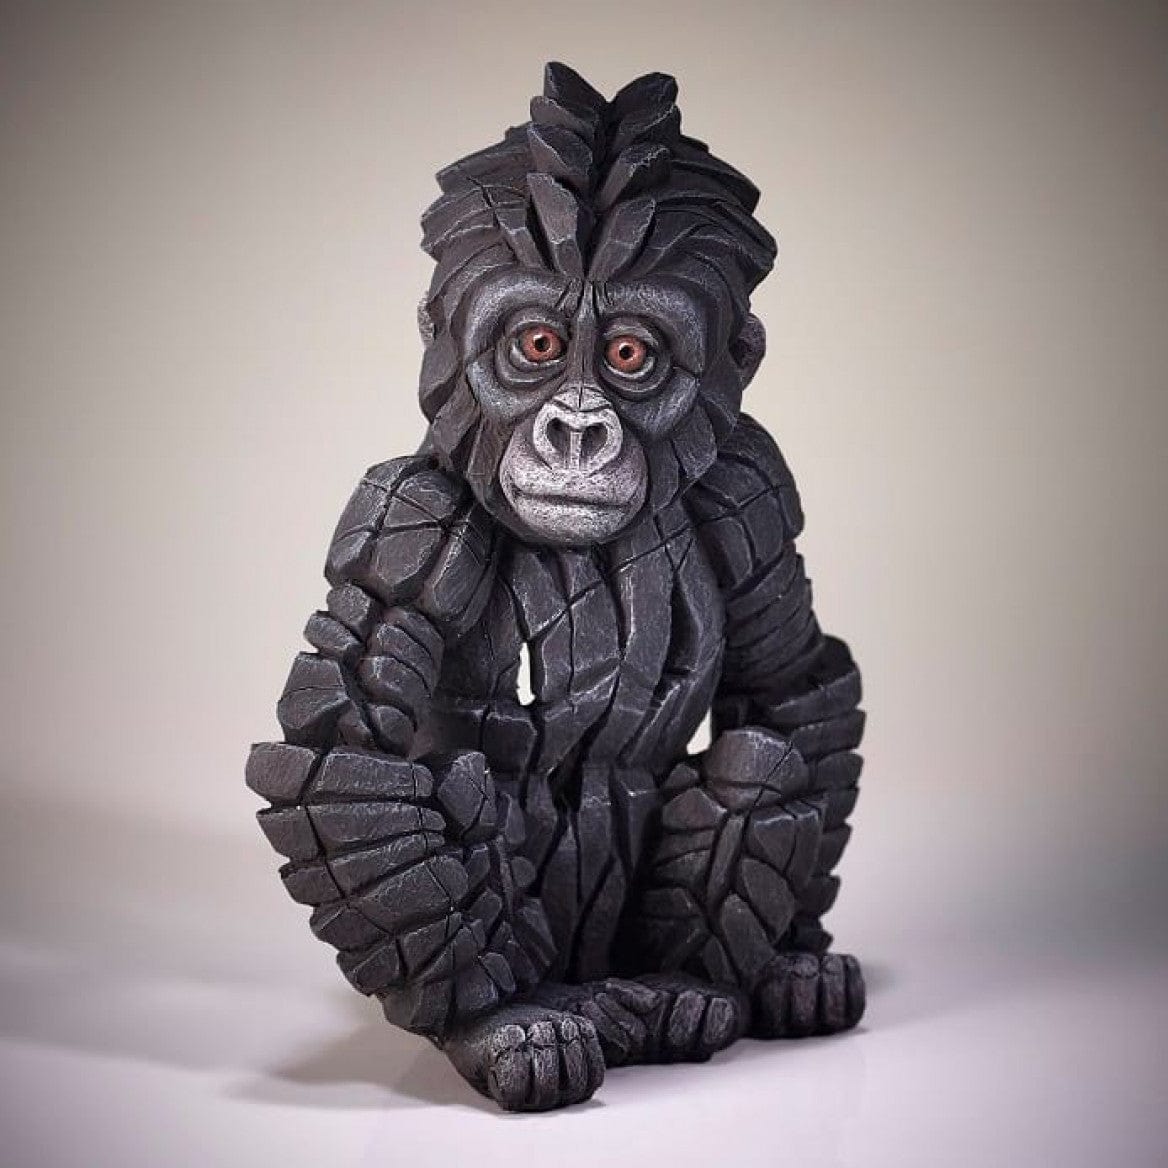 The Lair Baby Gorilla Edge Sculptures